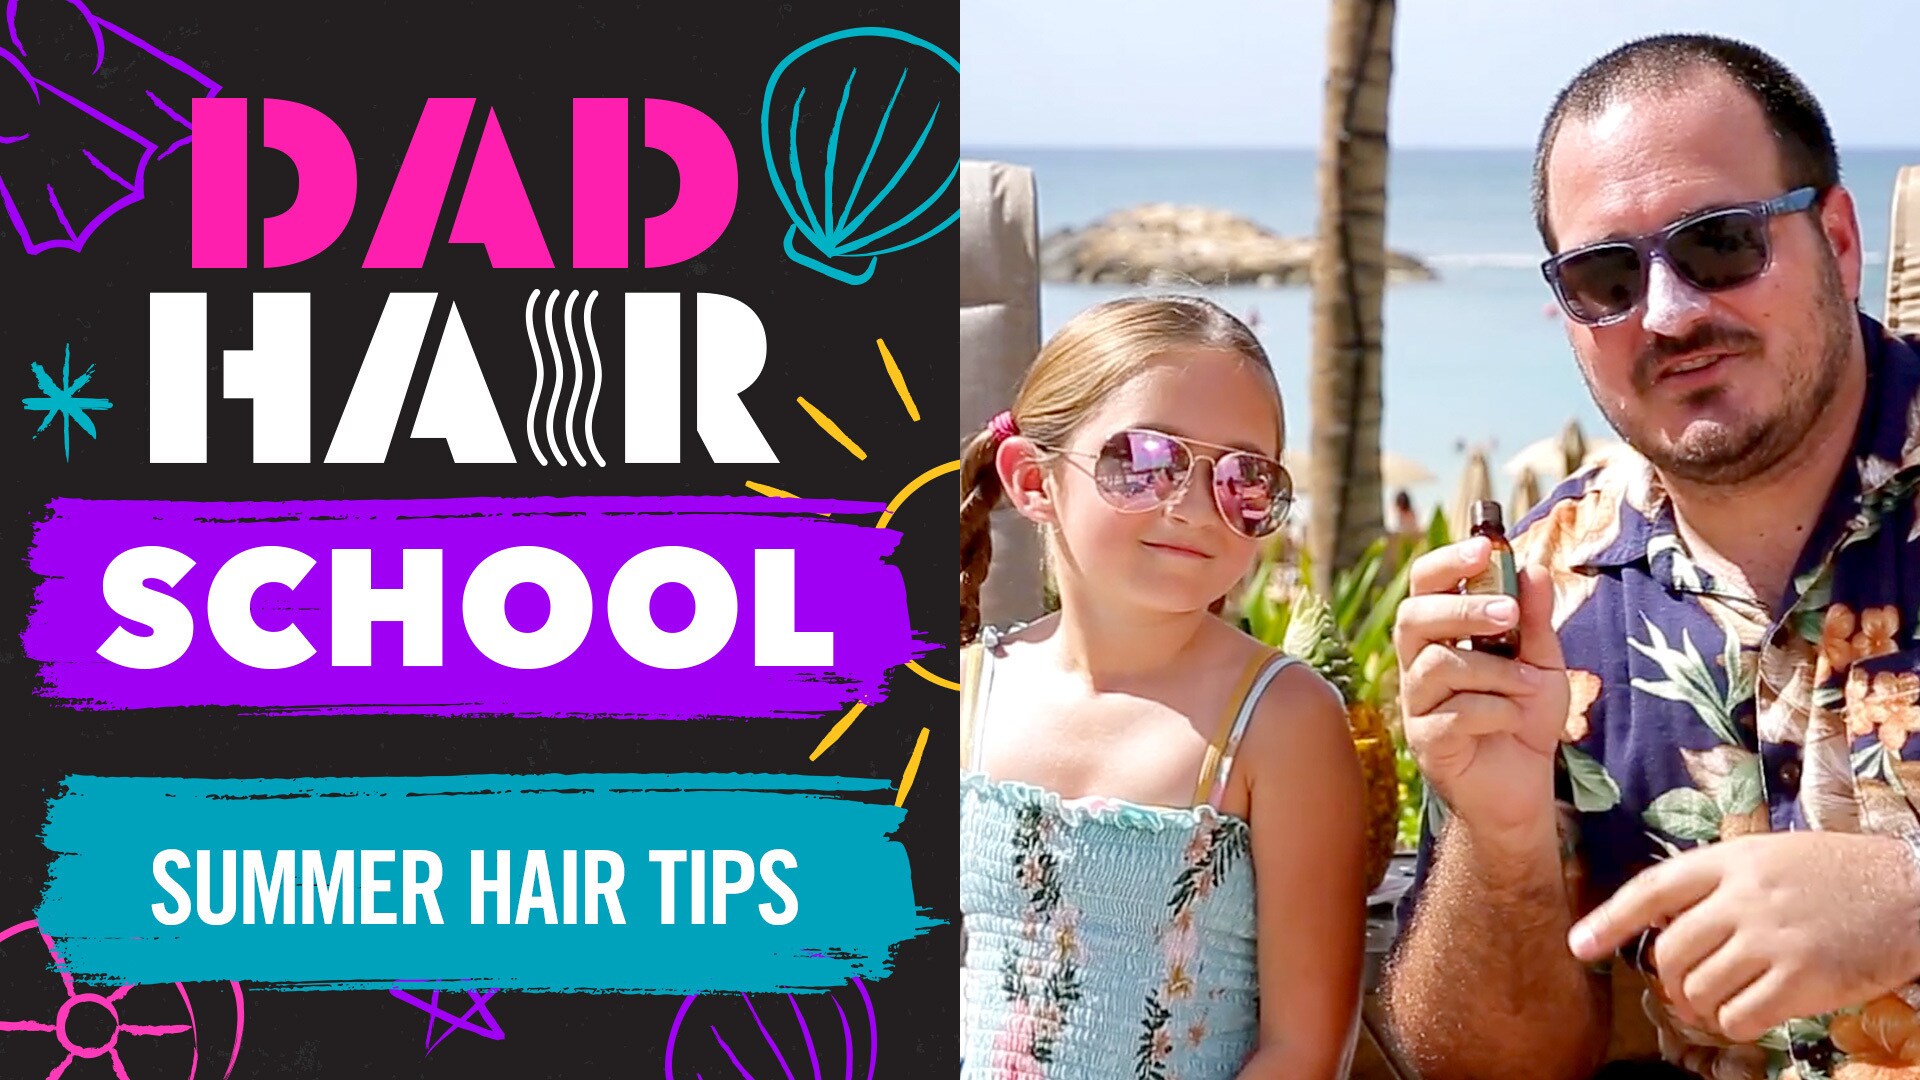 Summer Hair Tips | Dad Hair School